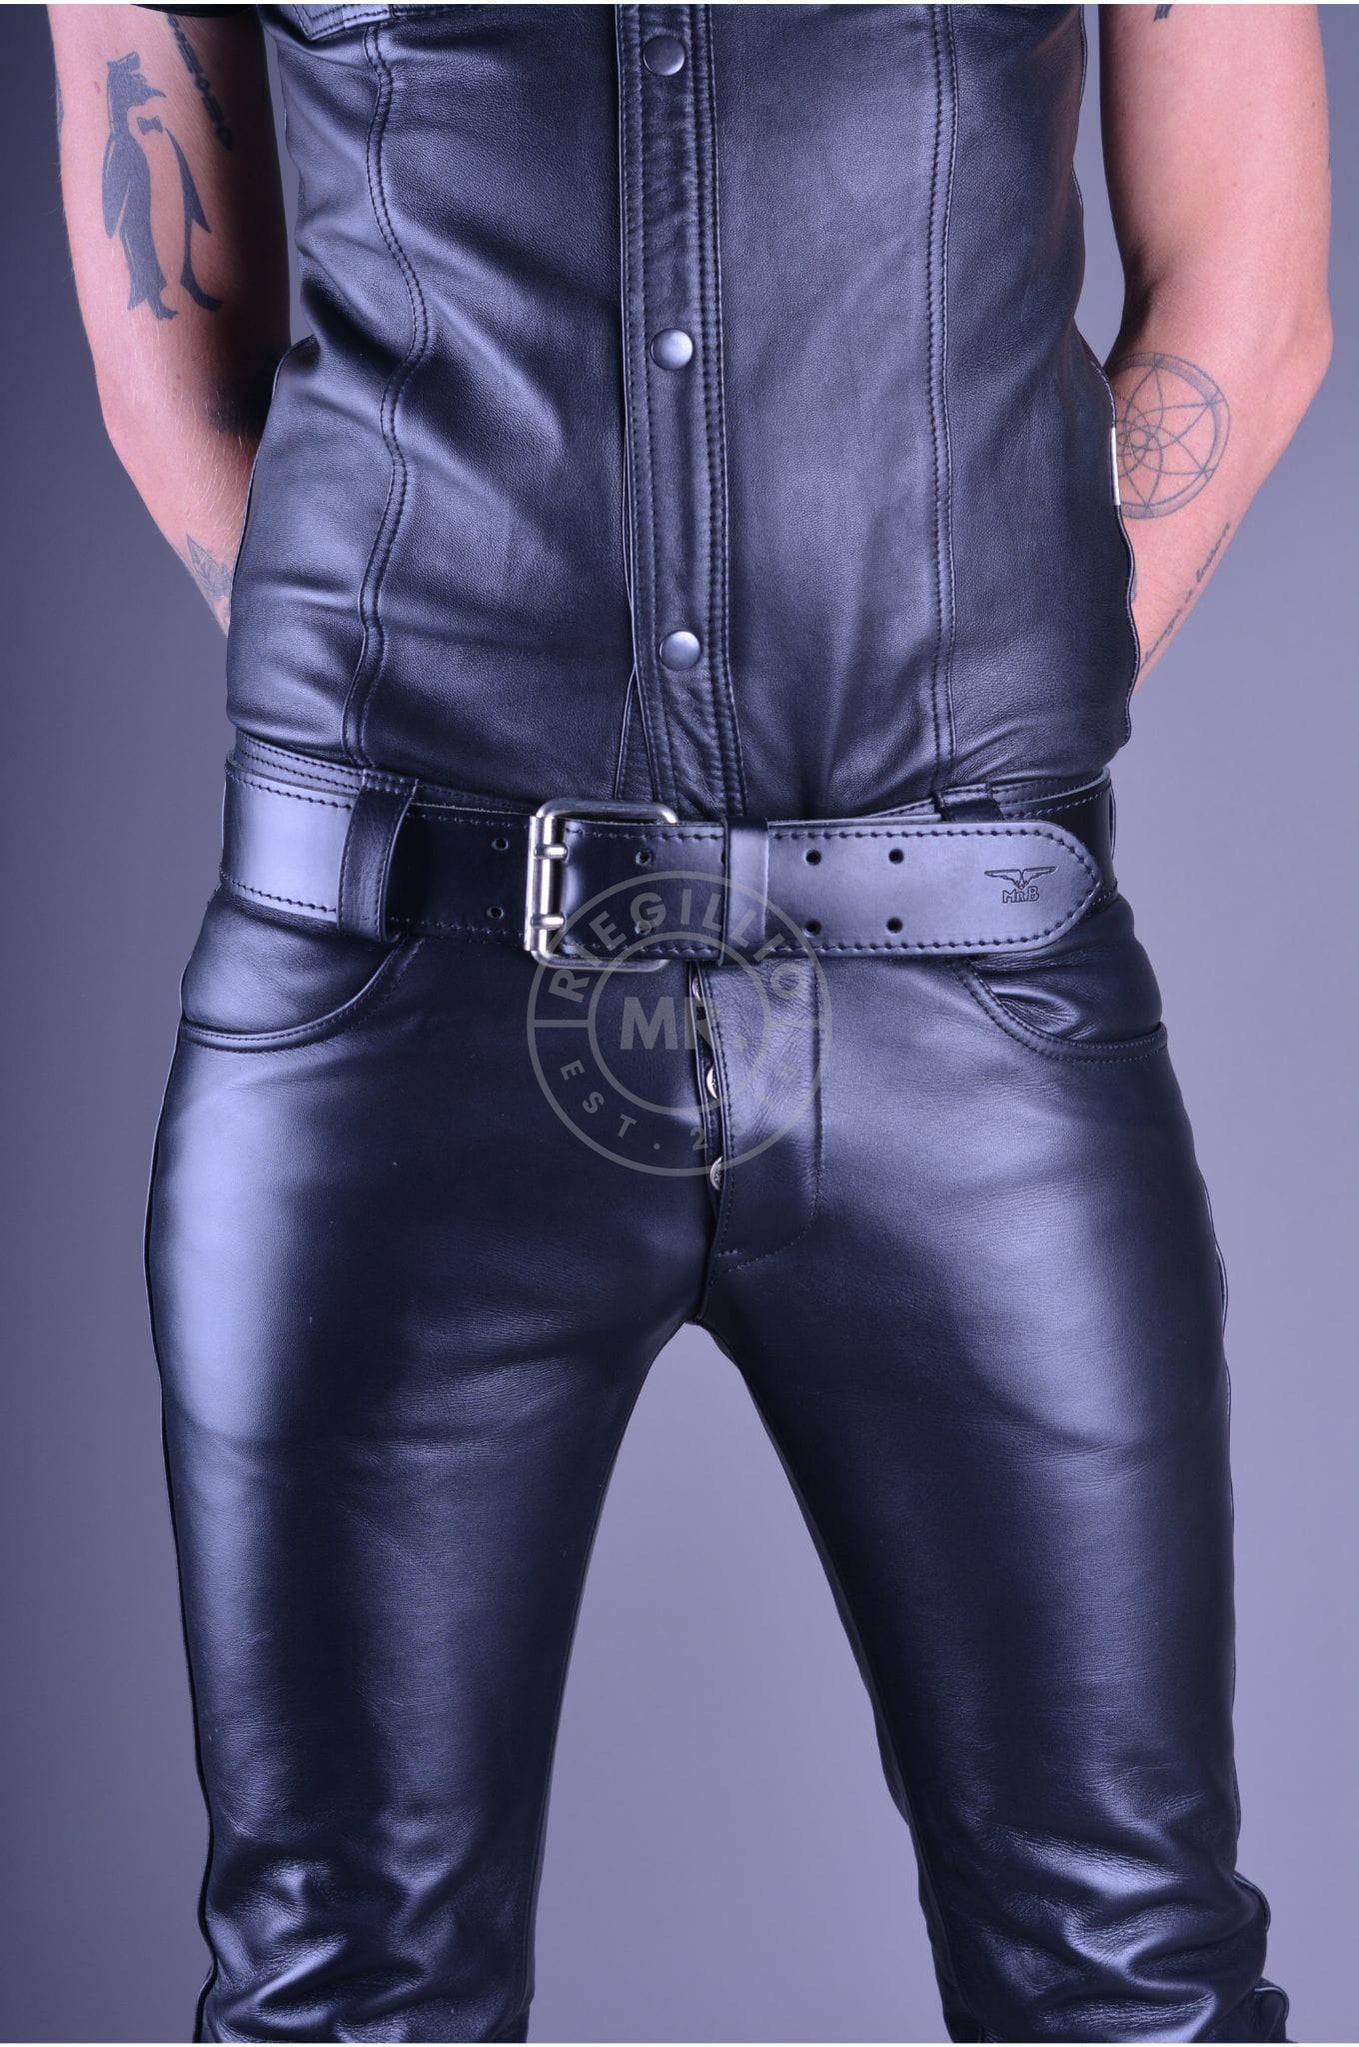 Mister B Leather Belt Stitched 5 cm - Black-at MR. Riegillio